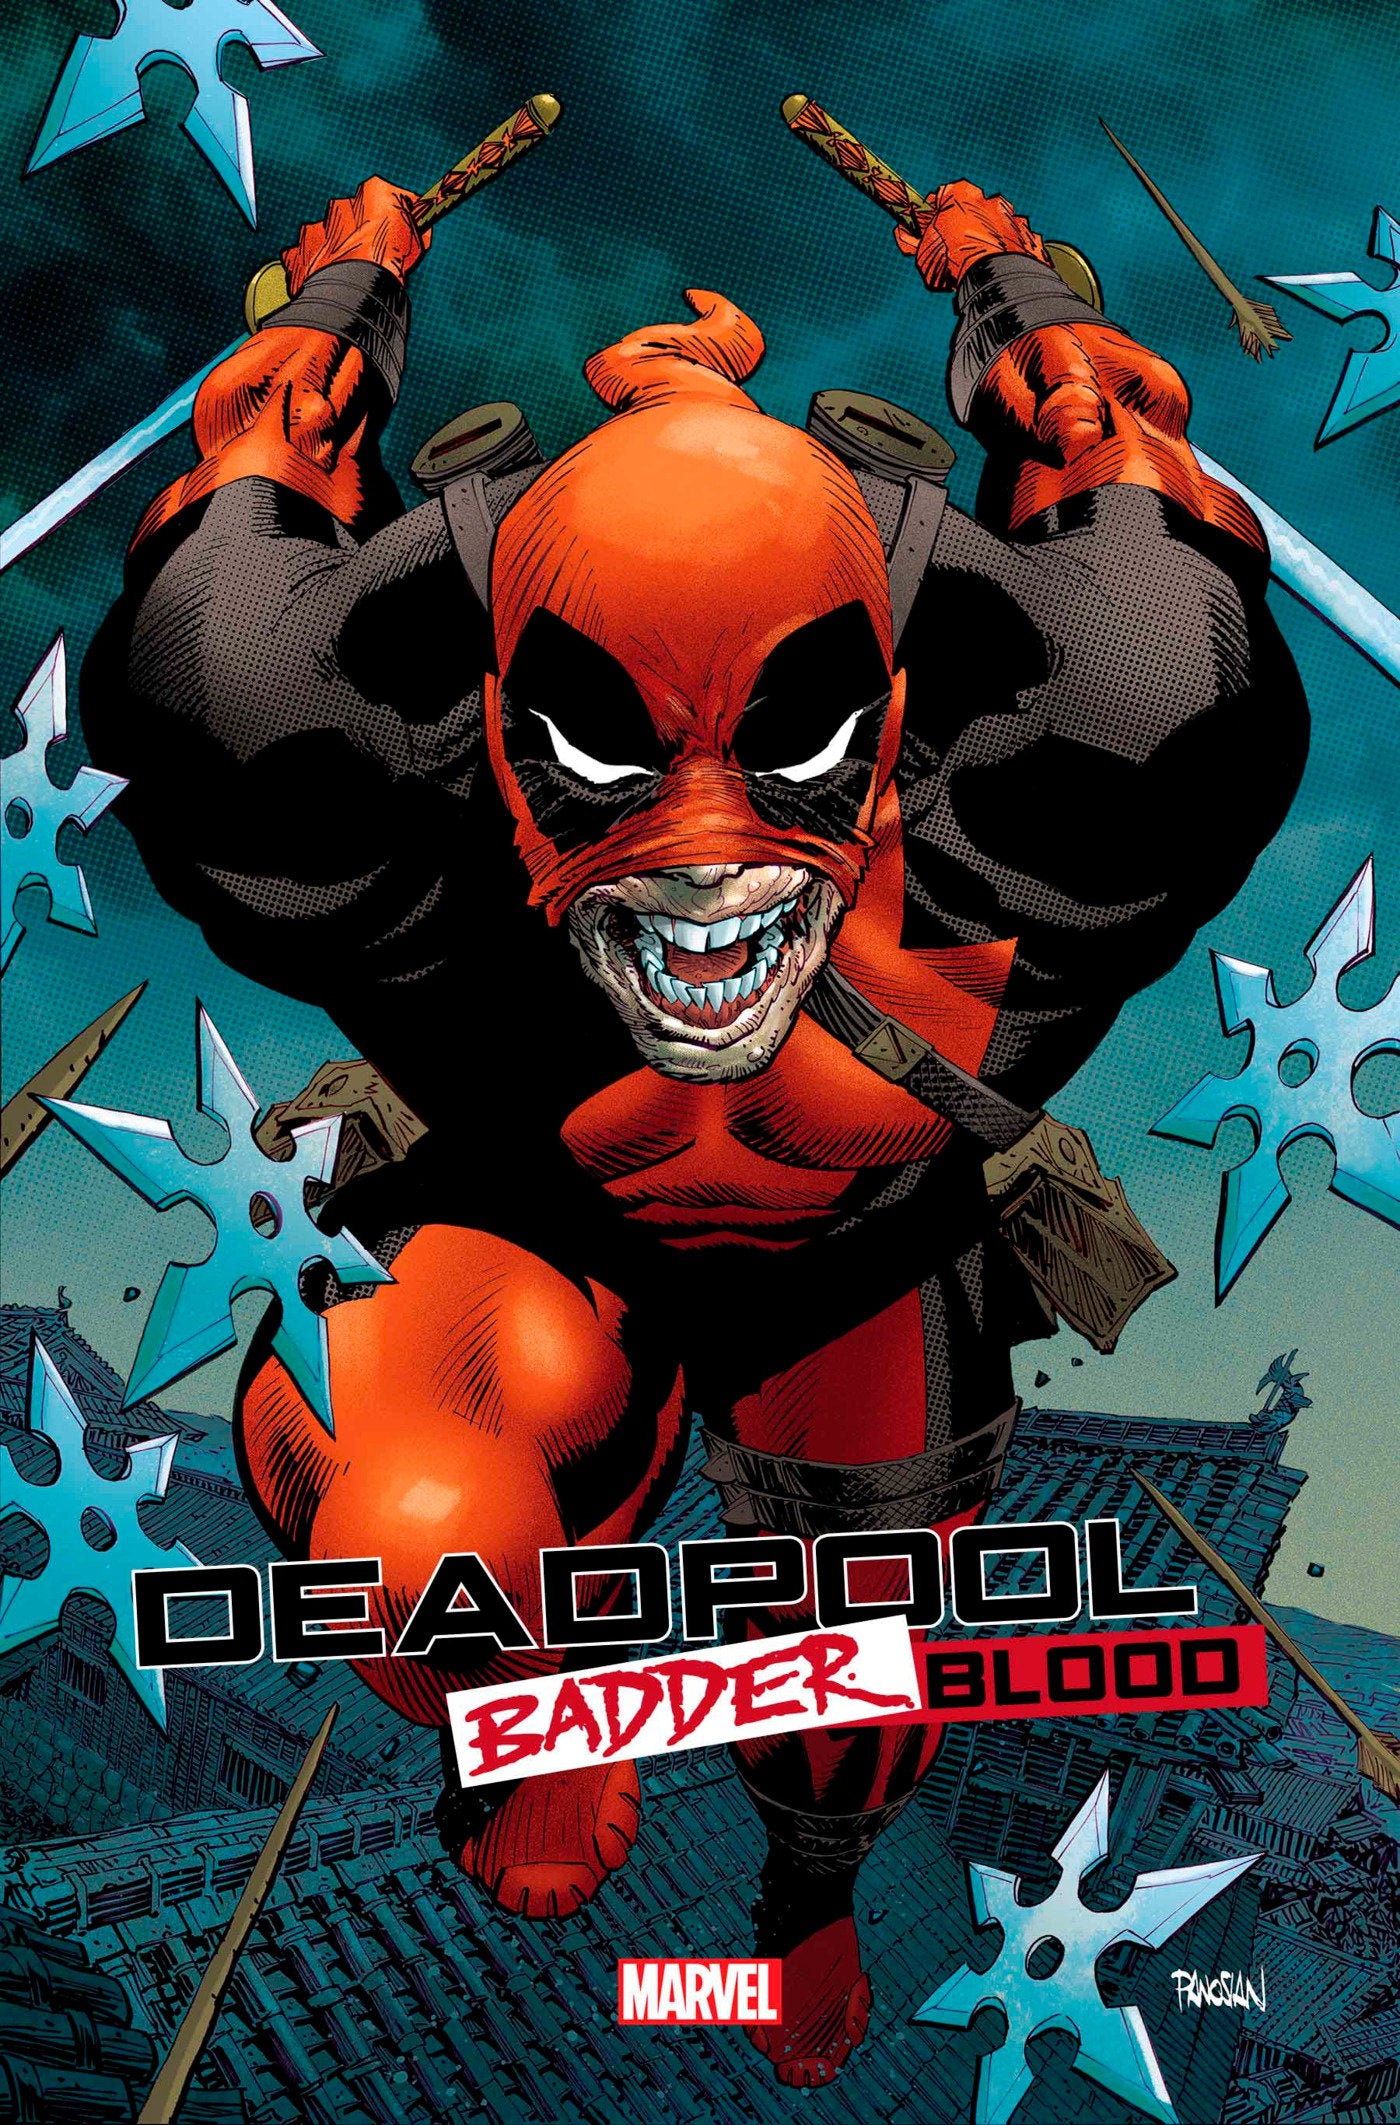 Deadpool: Badder Blood 1 Dan Panosian Variant